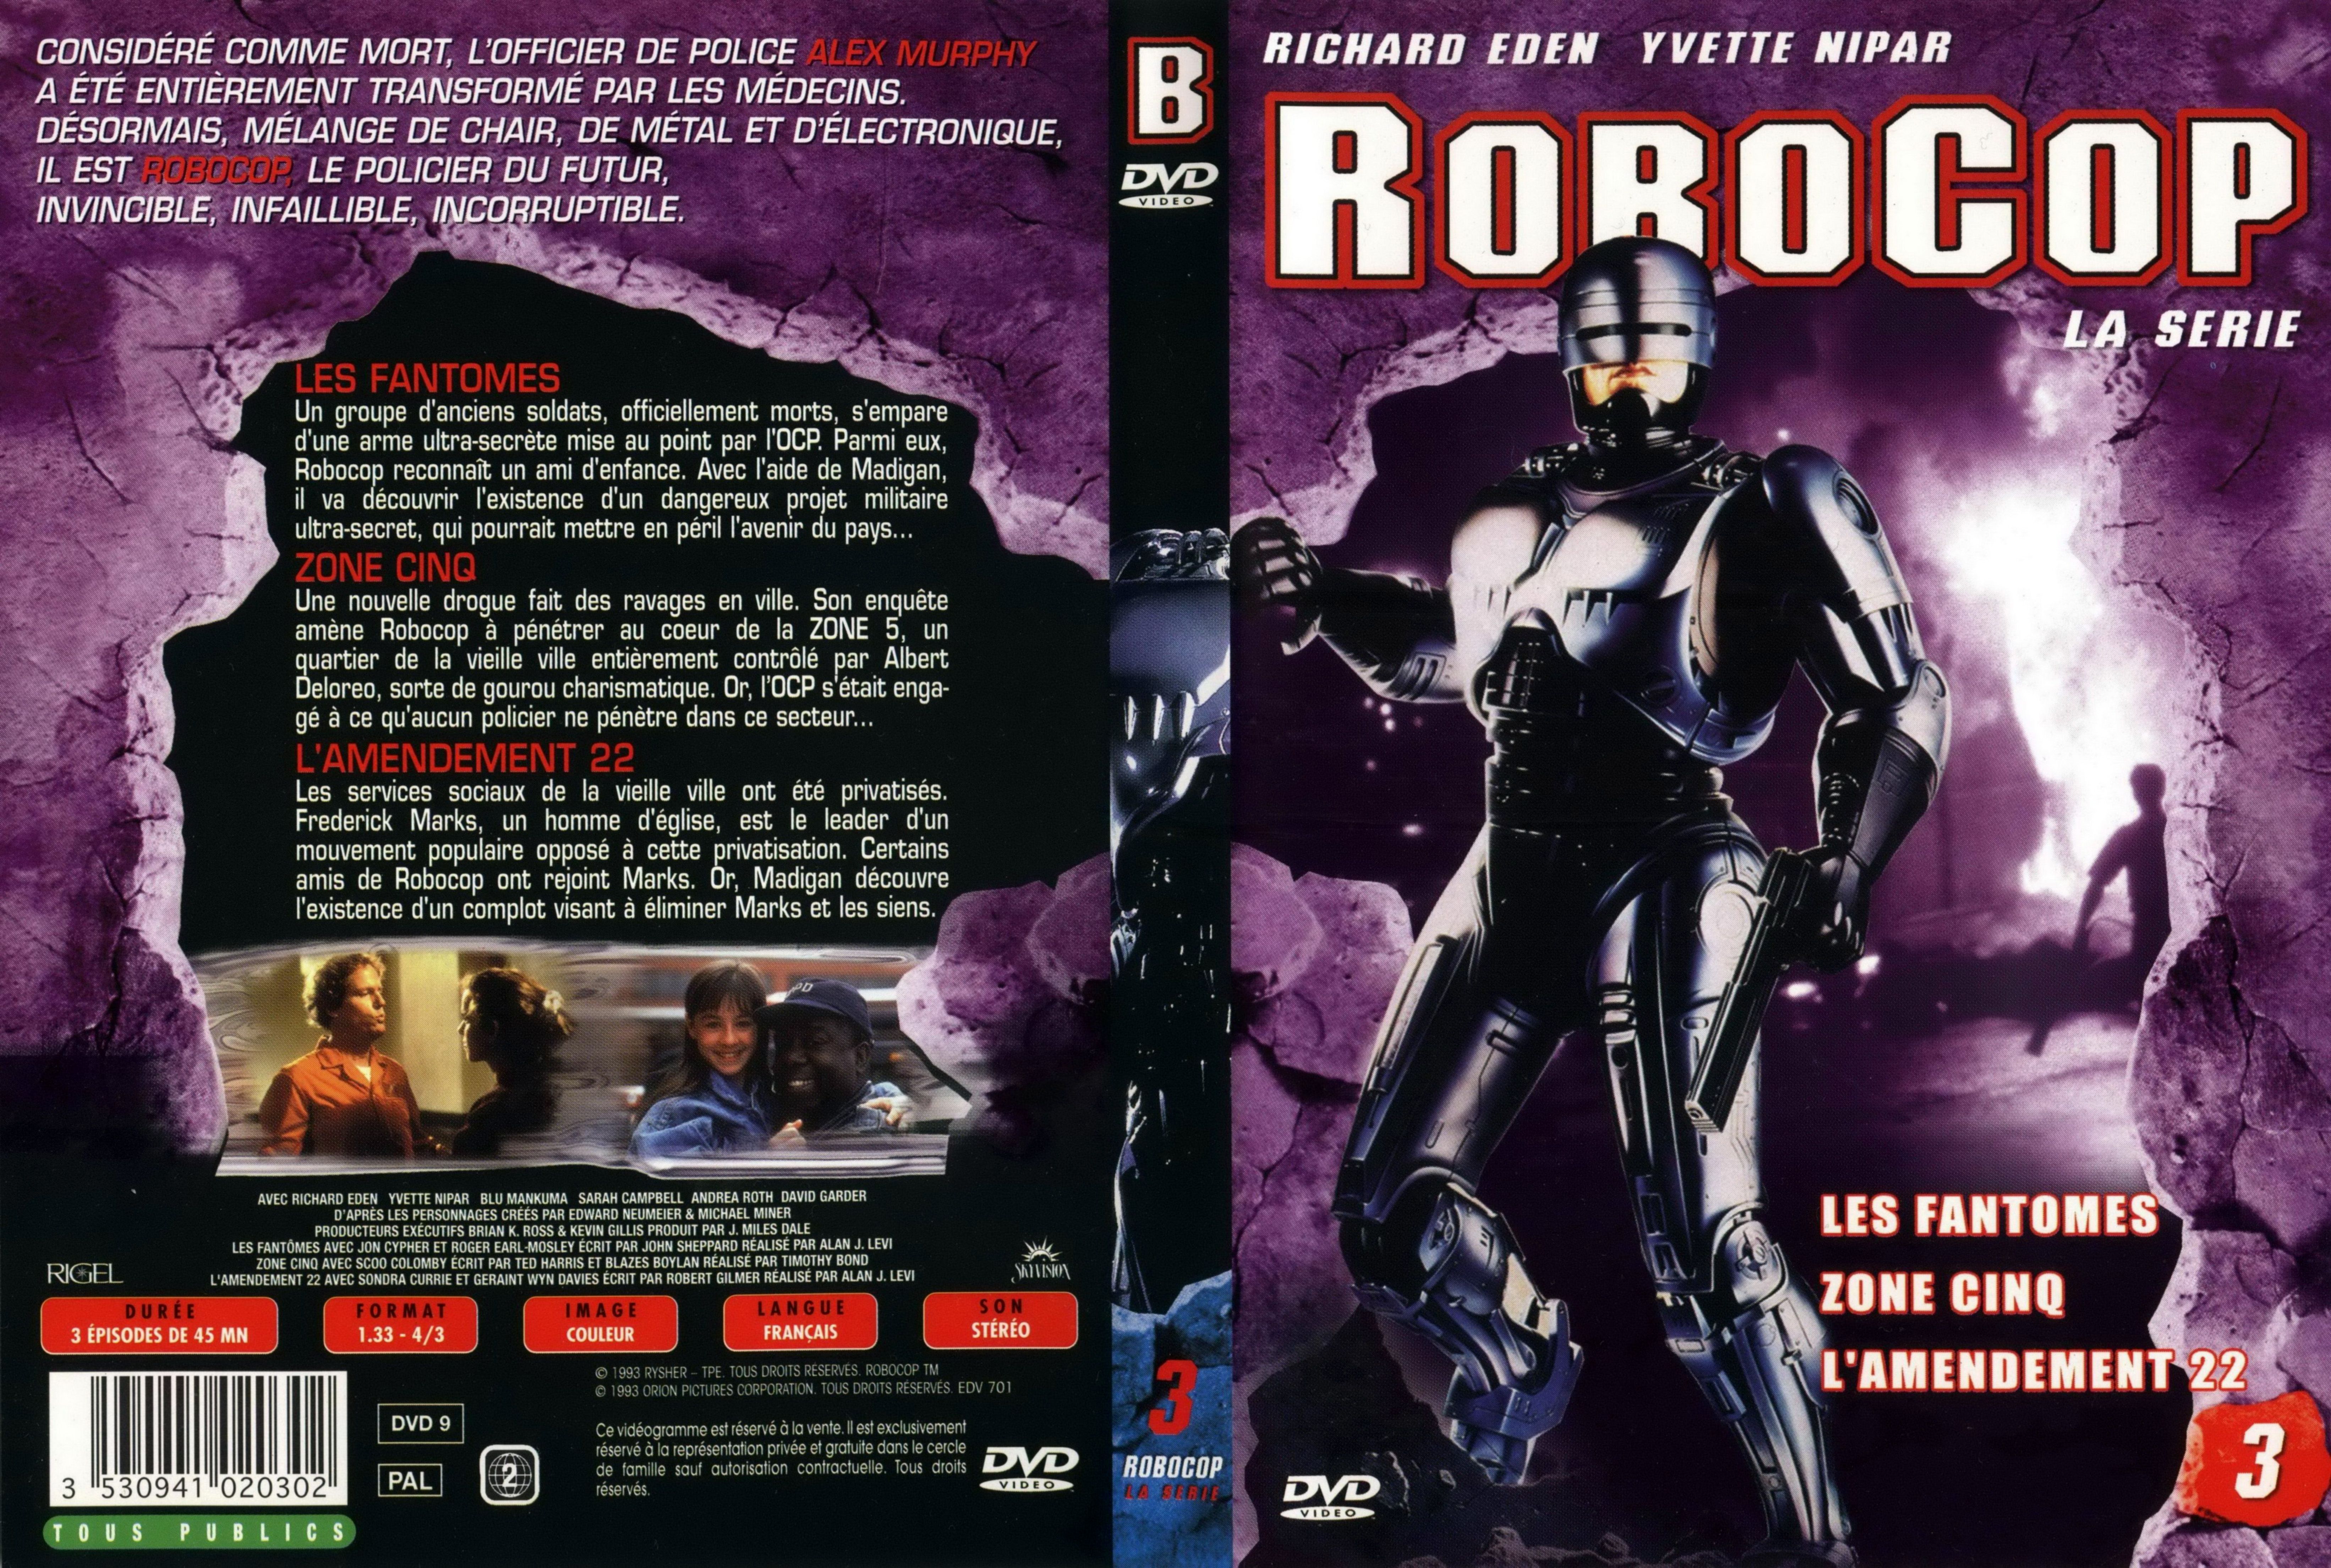 Jaquette DVD Robocop la srie vol 3